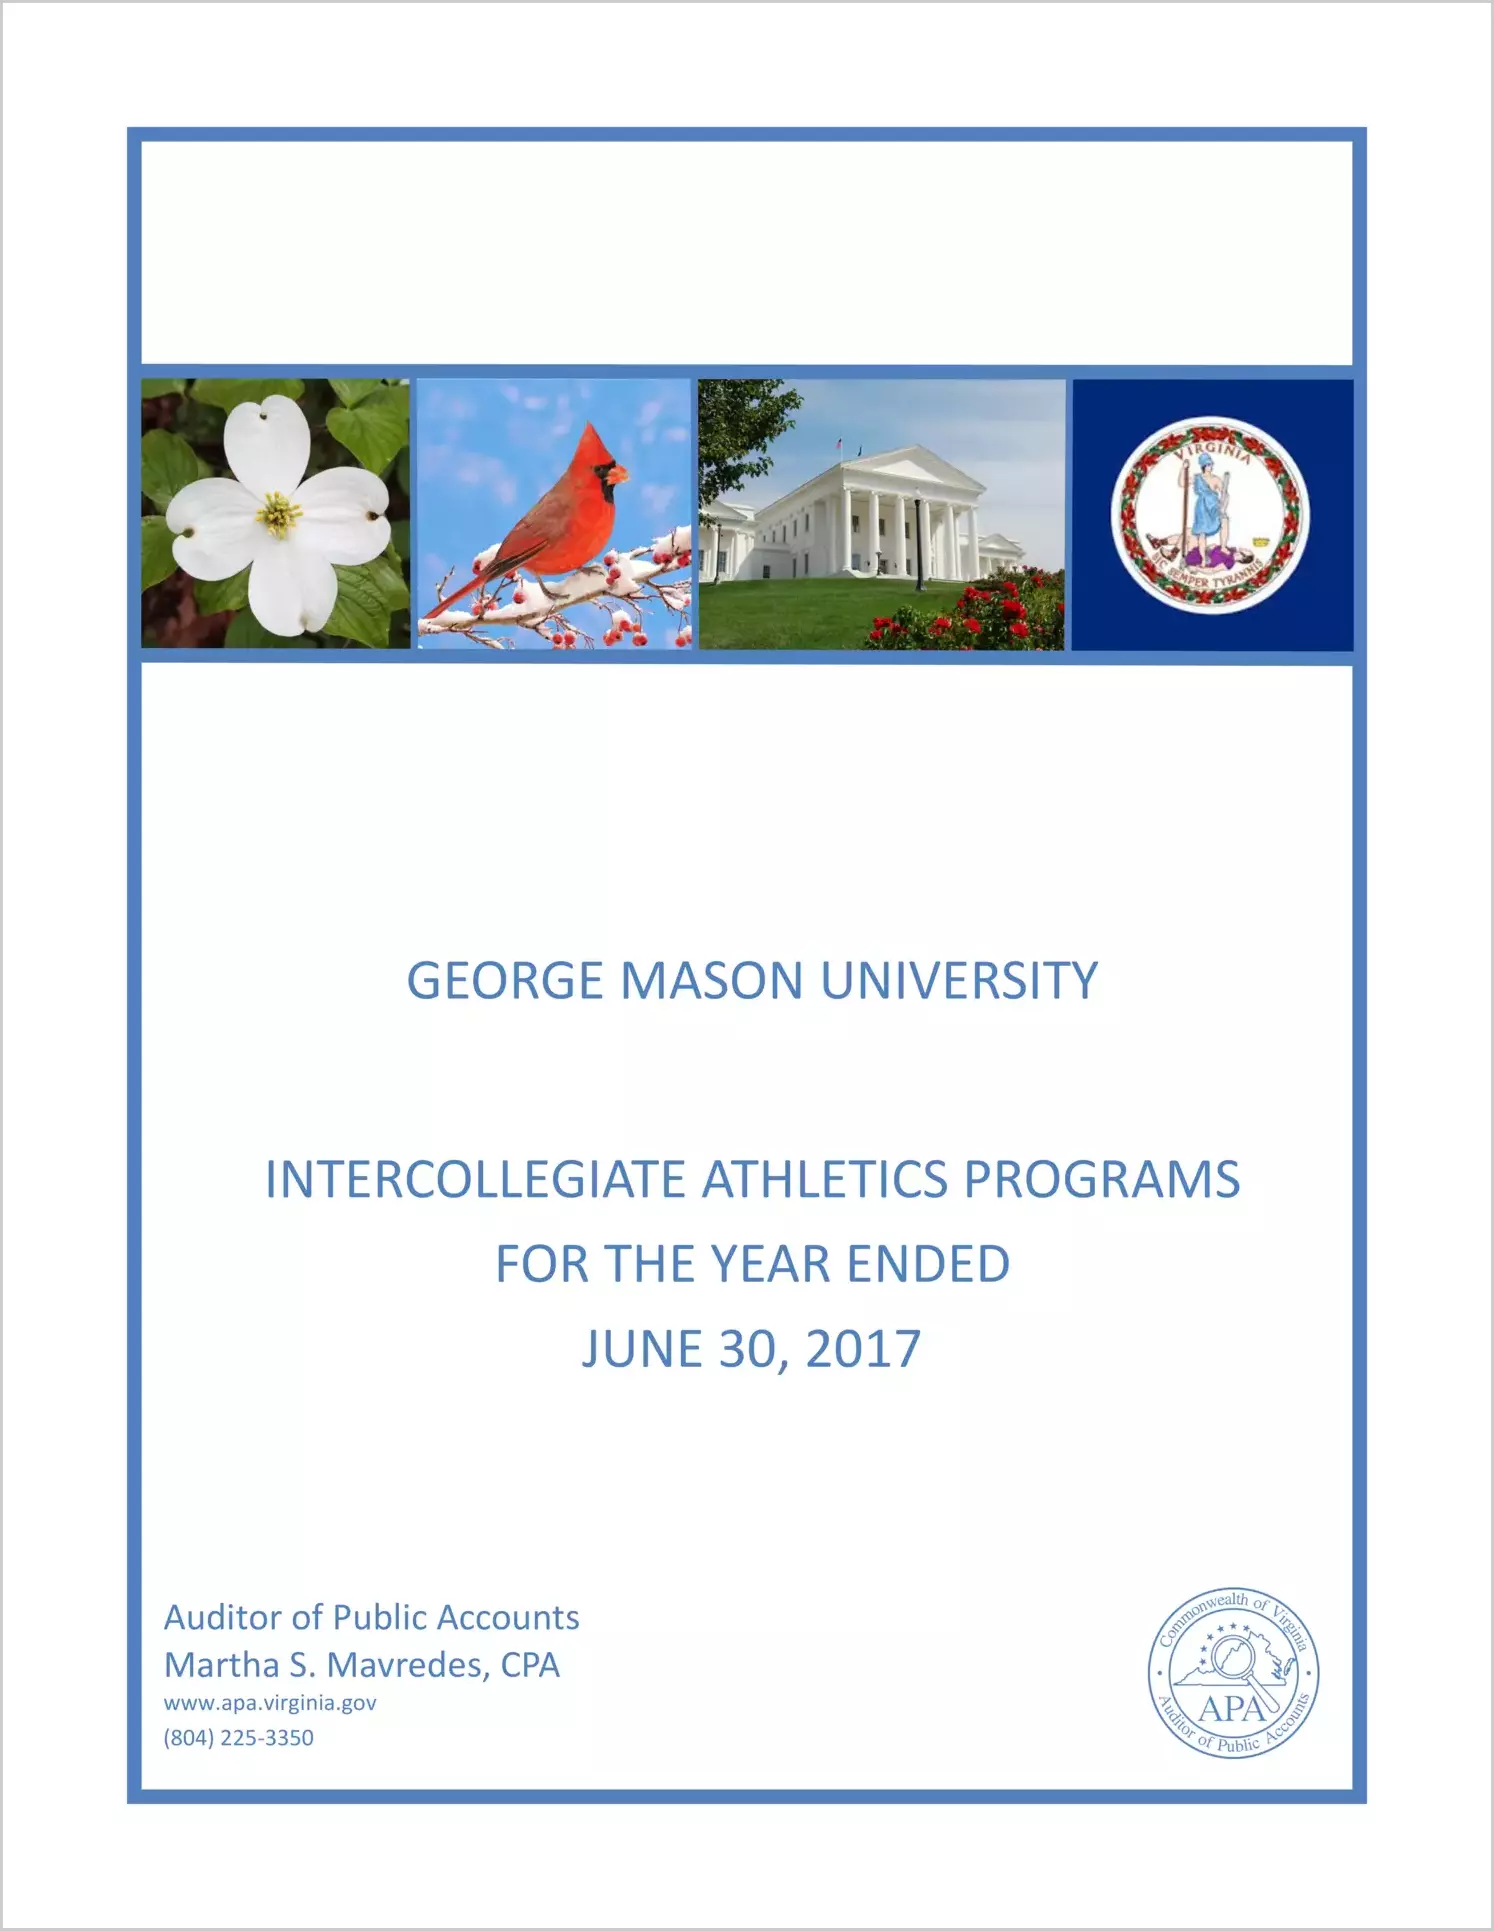 George Mason University Intercollegiate Athletics Programs for the year ended June 30, 2017